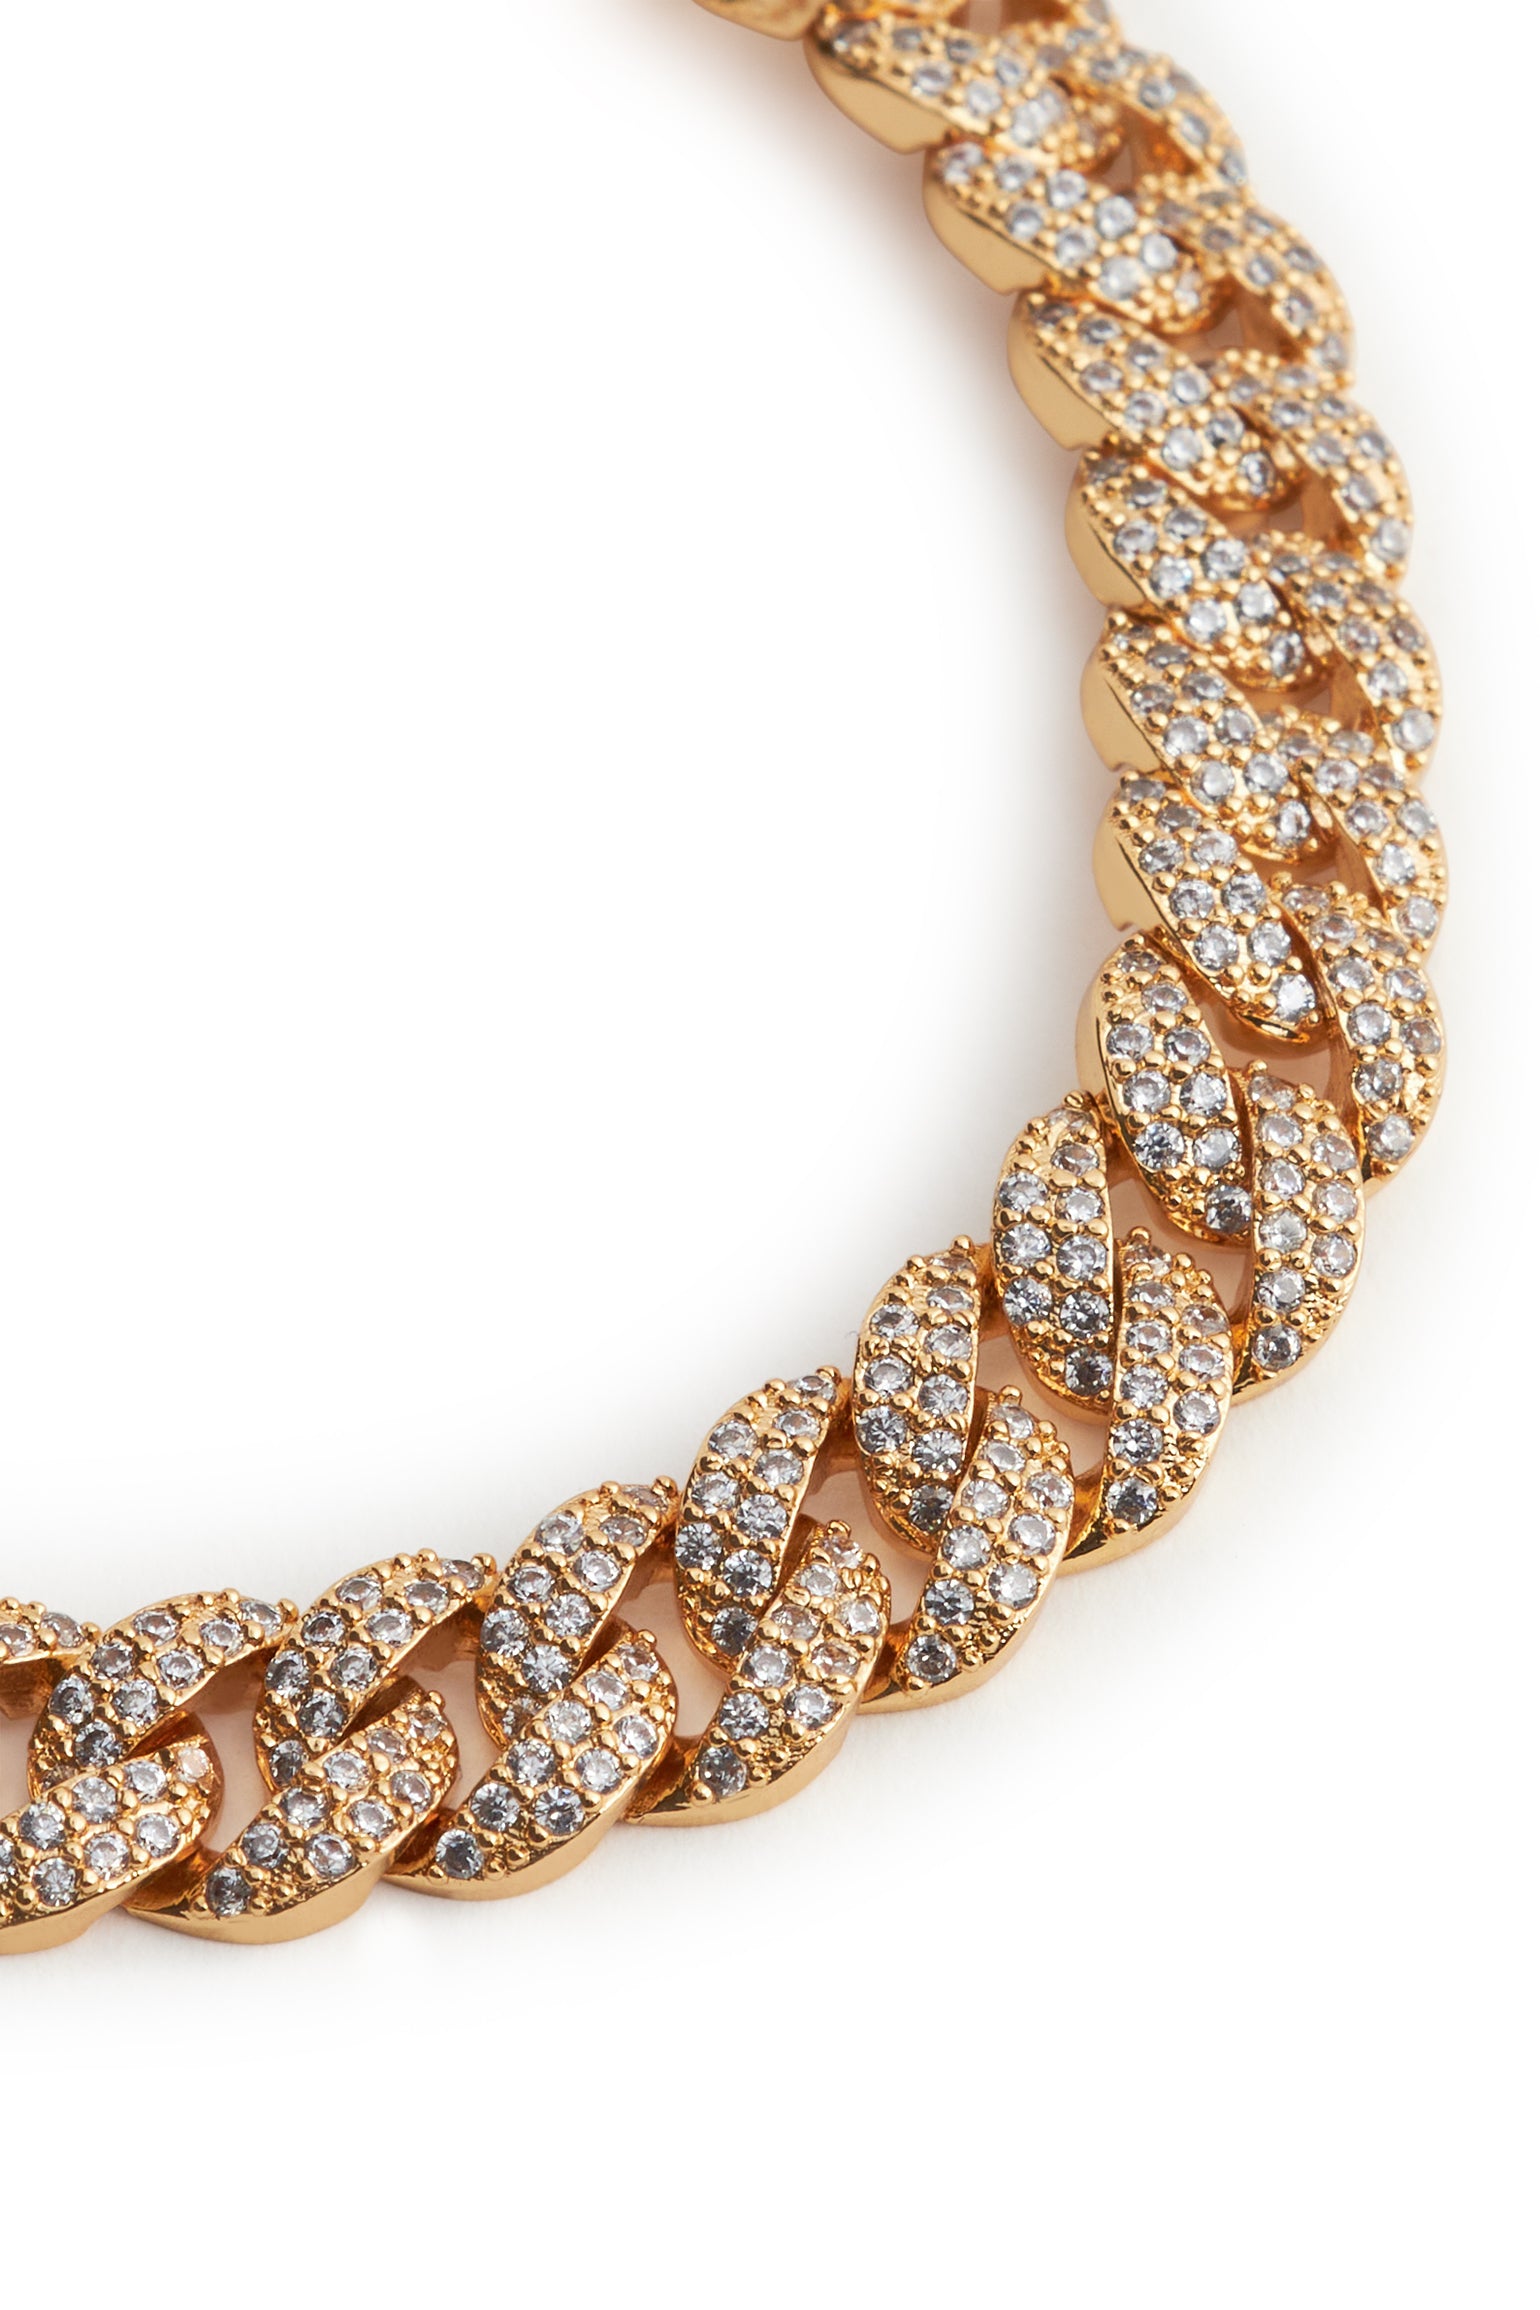 MELUSINA BIJOUX Gold Groumette Bracelet with Zircons